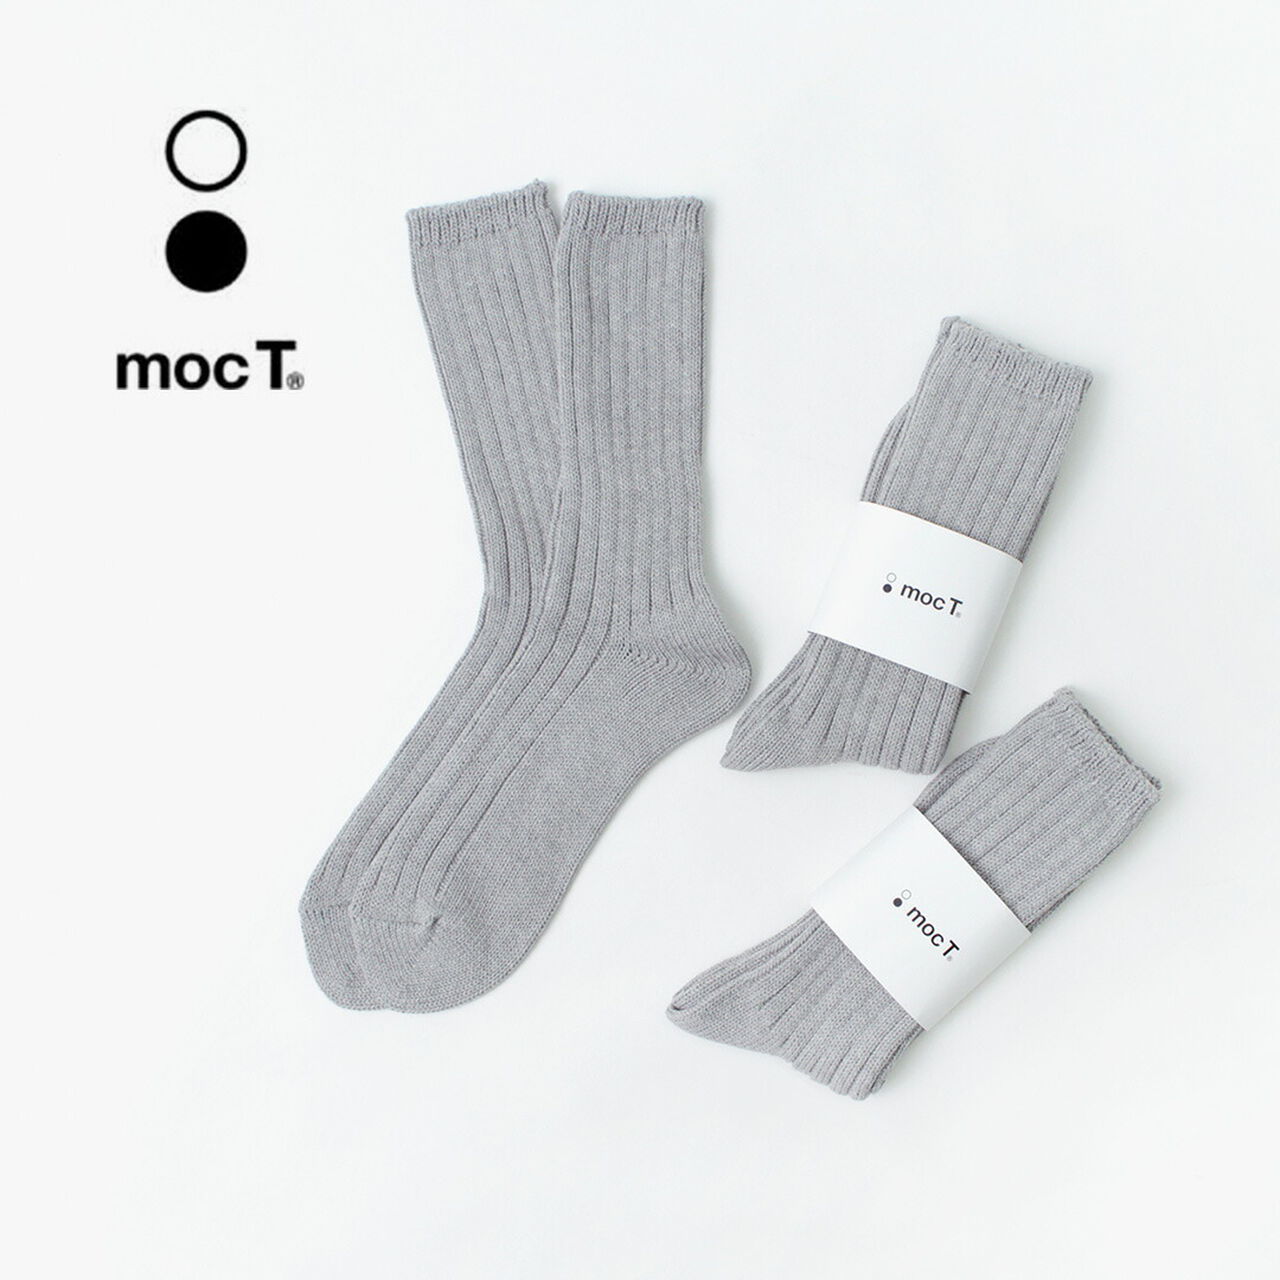 MOC T Double cylinder socks